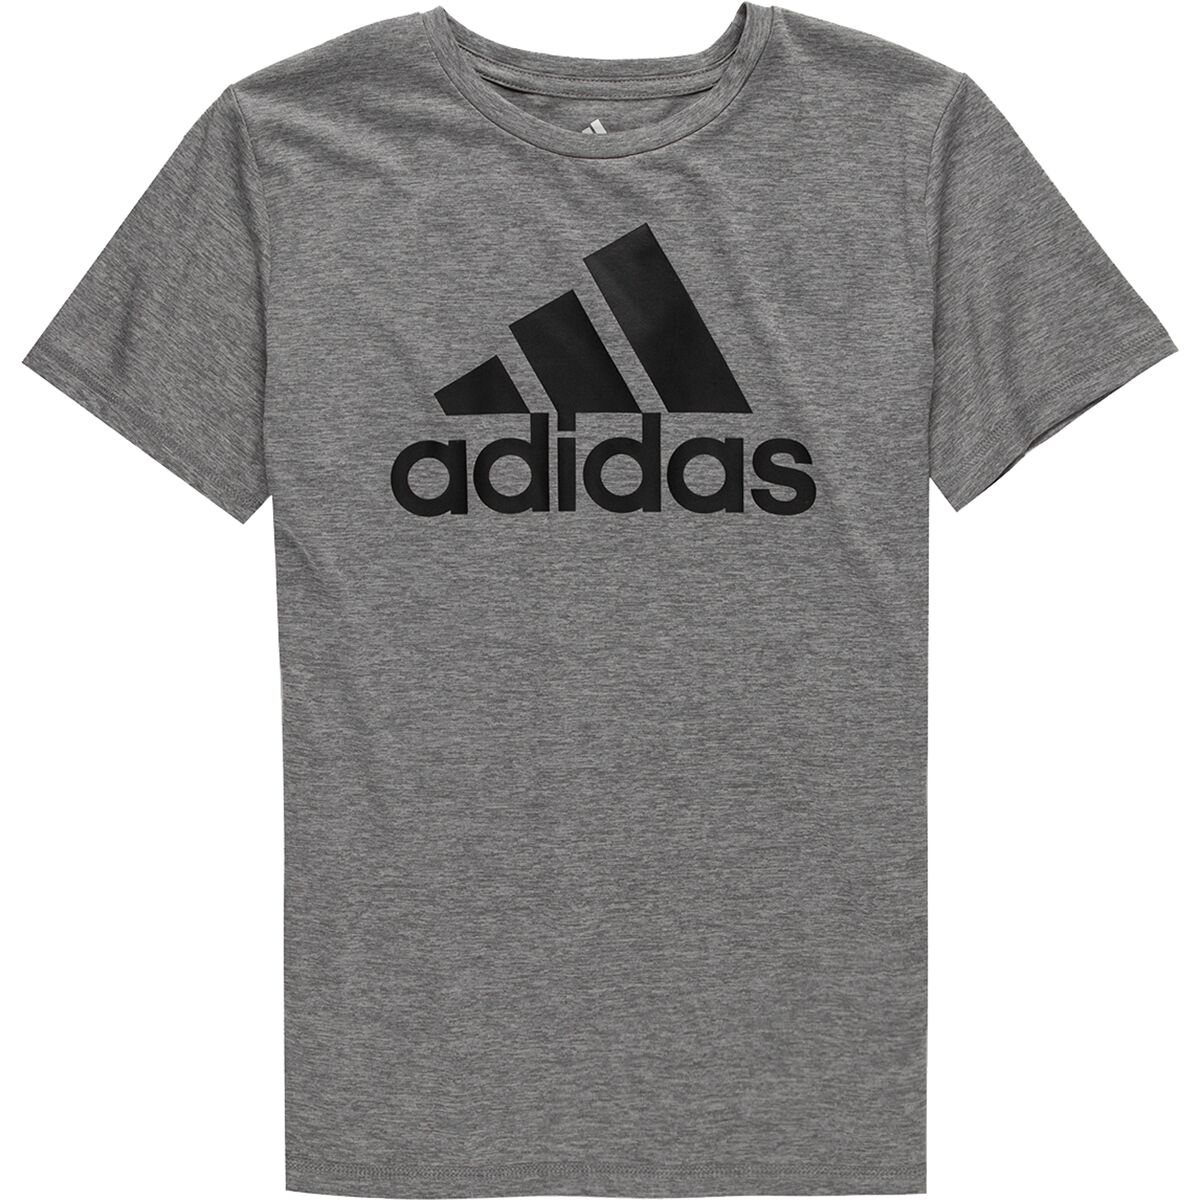 Adidas Replenish Melange Performance T-Shirt - Boys' - Kids